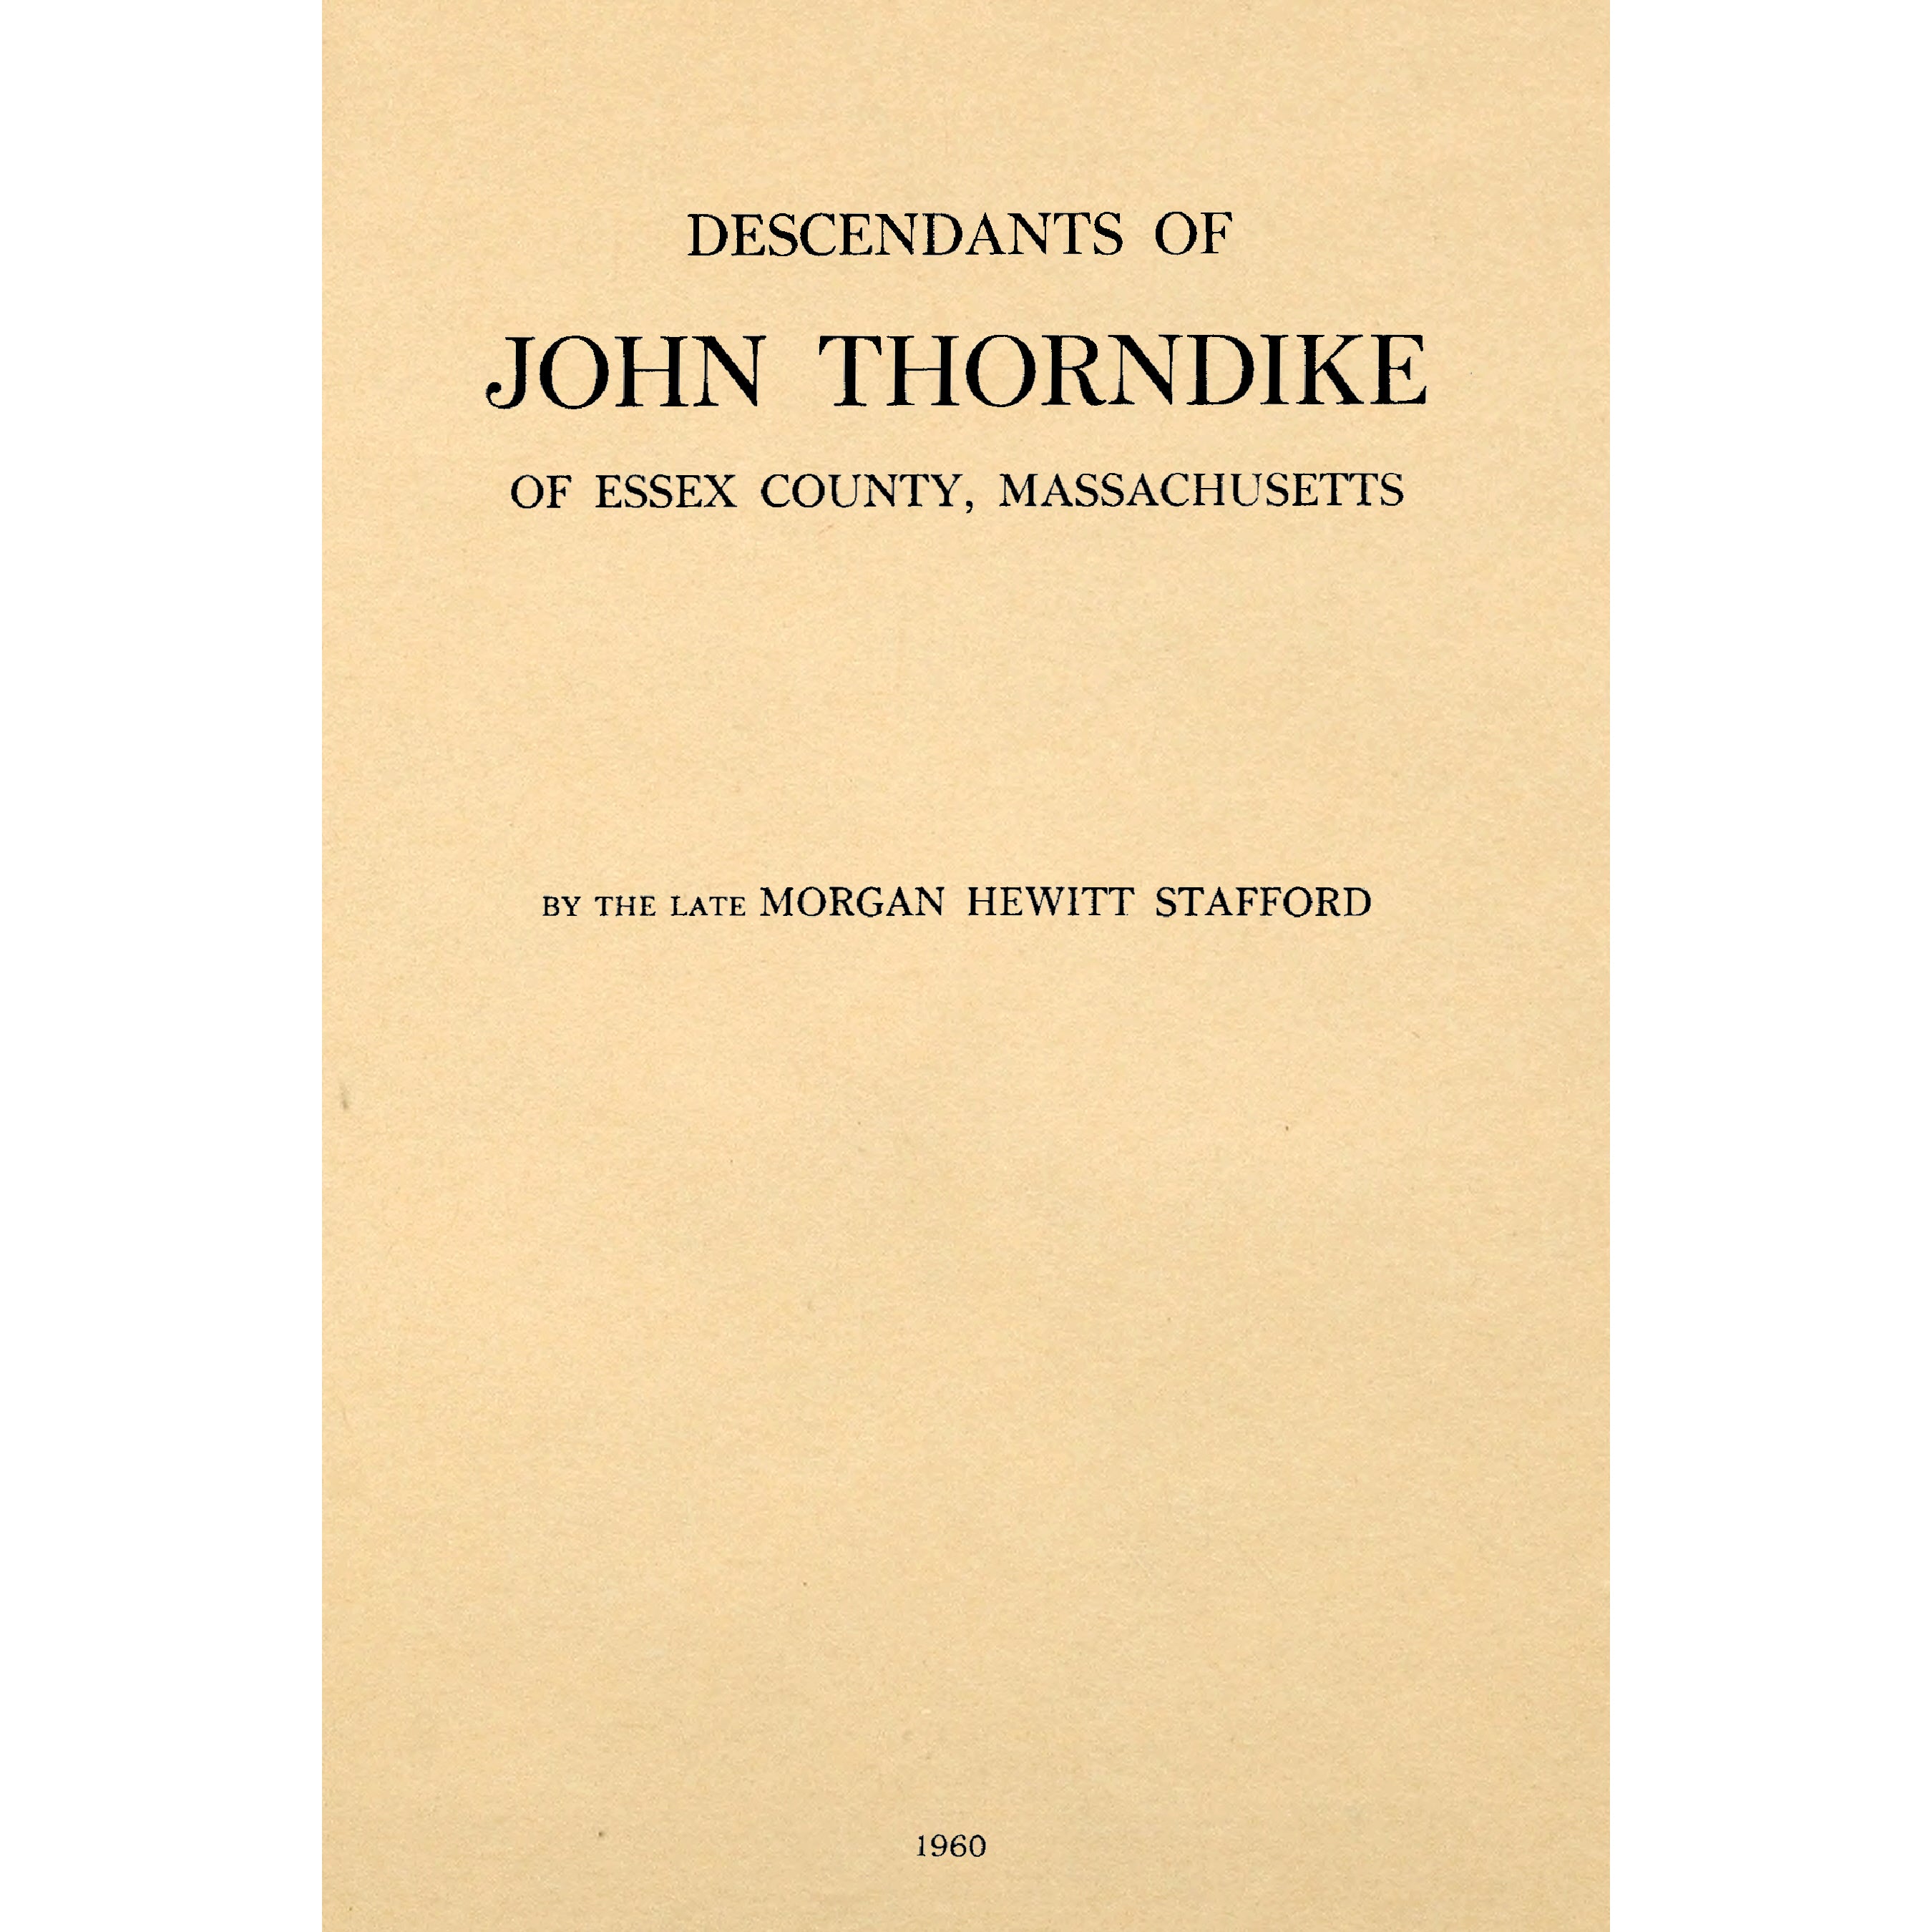 Descendents of John Thorndike of essex county, Massachusetts